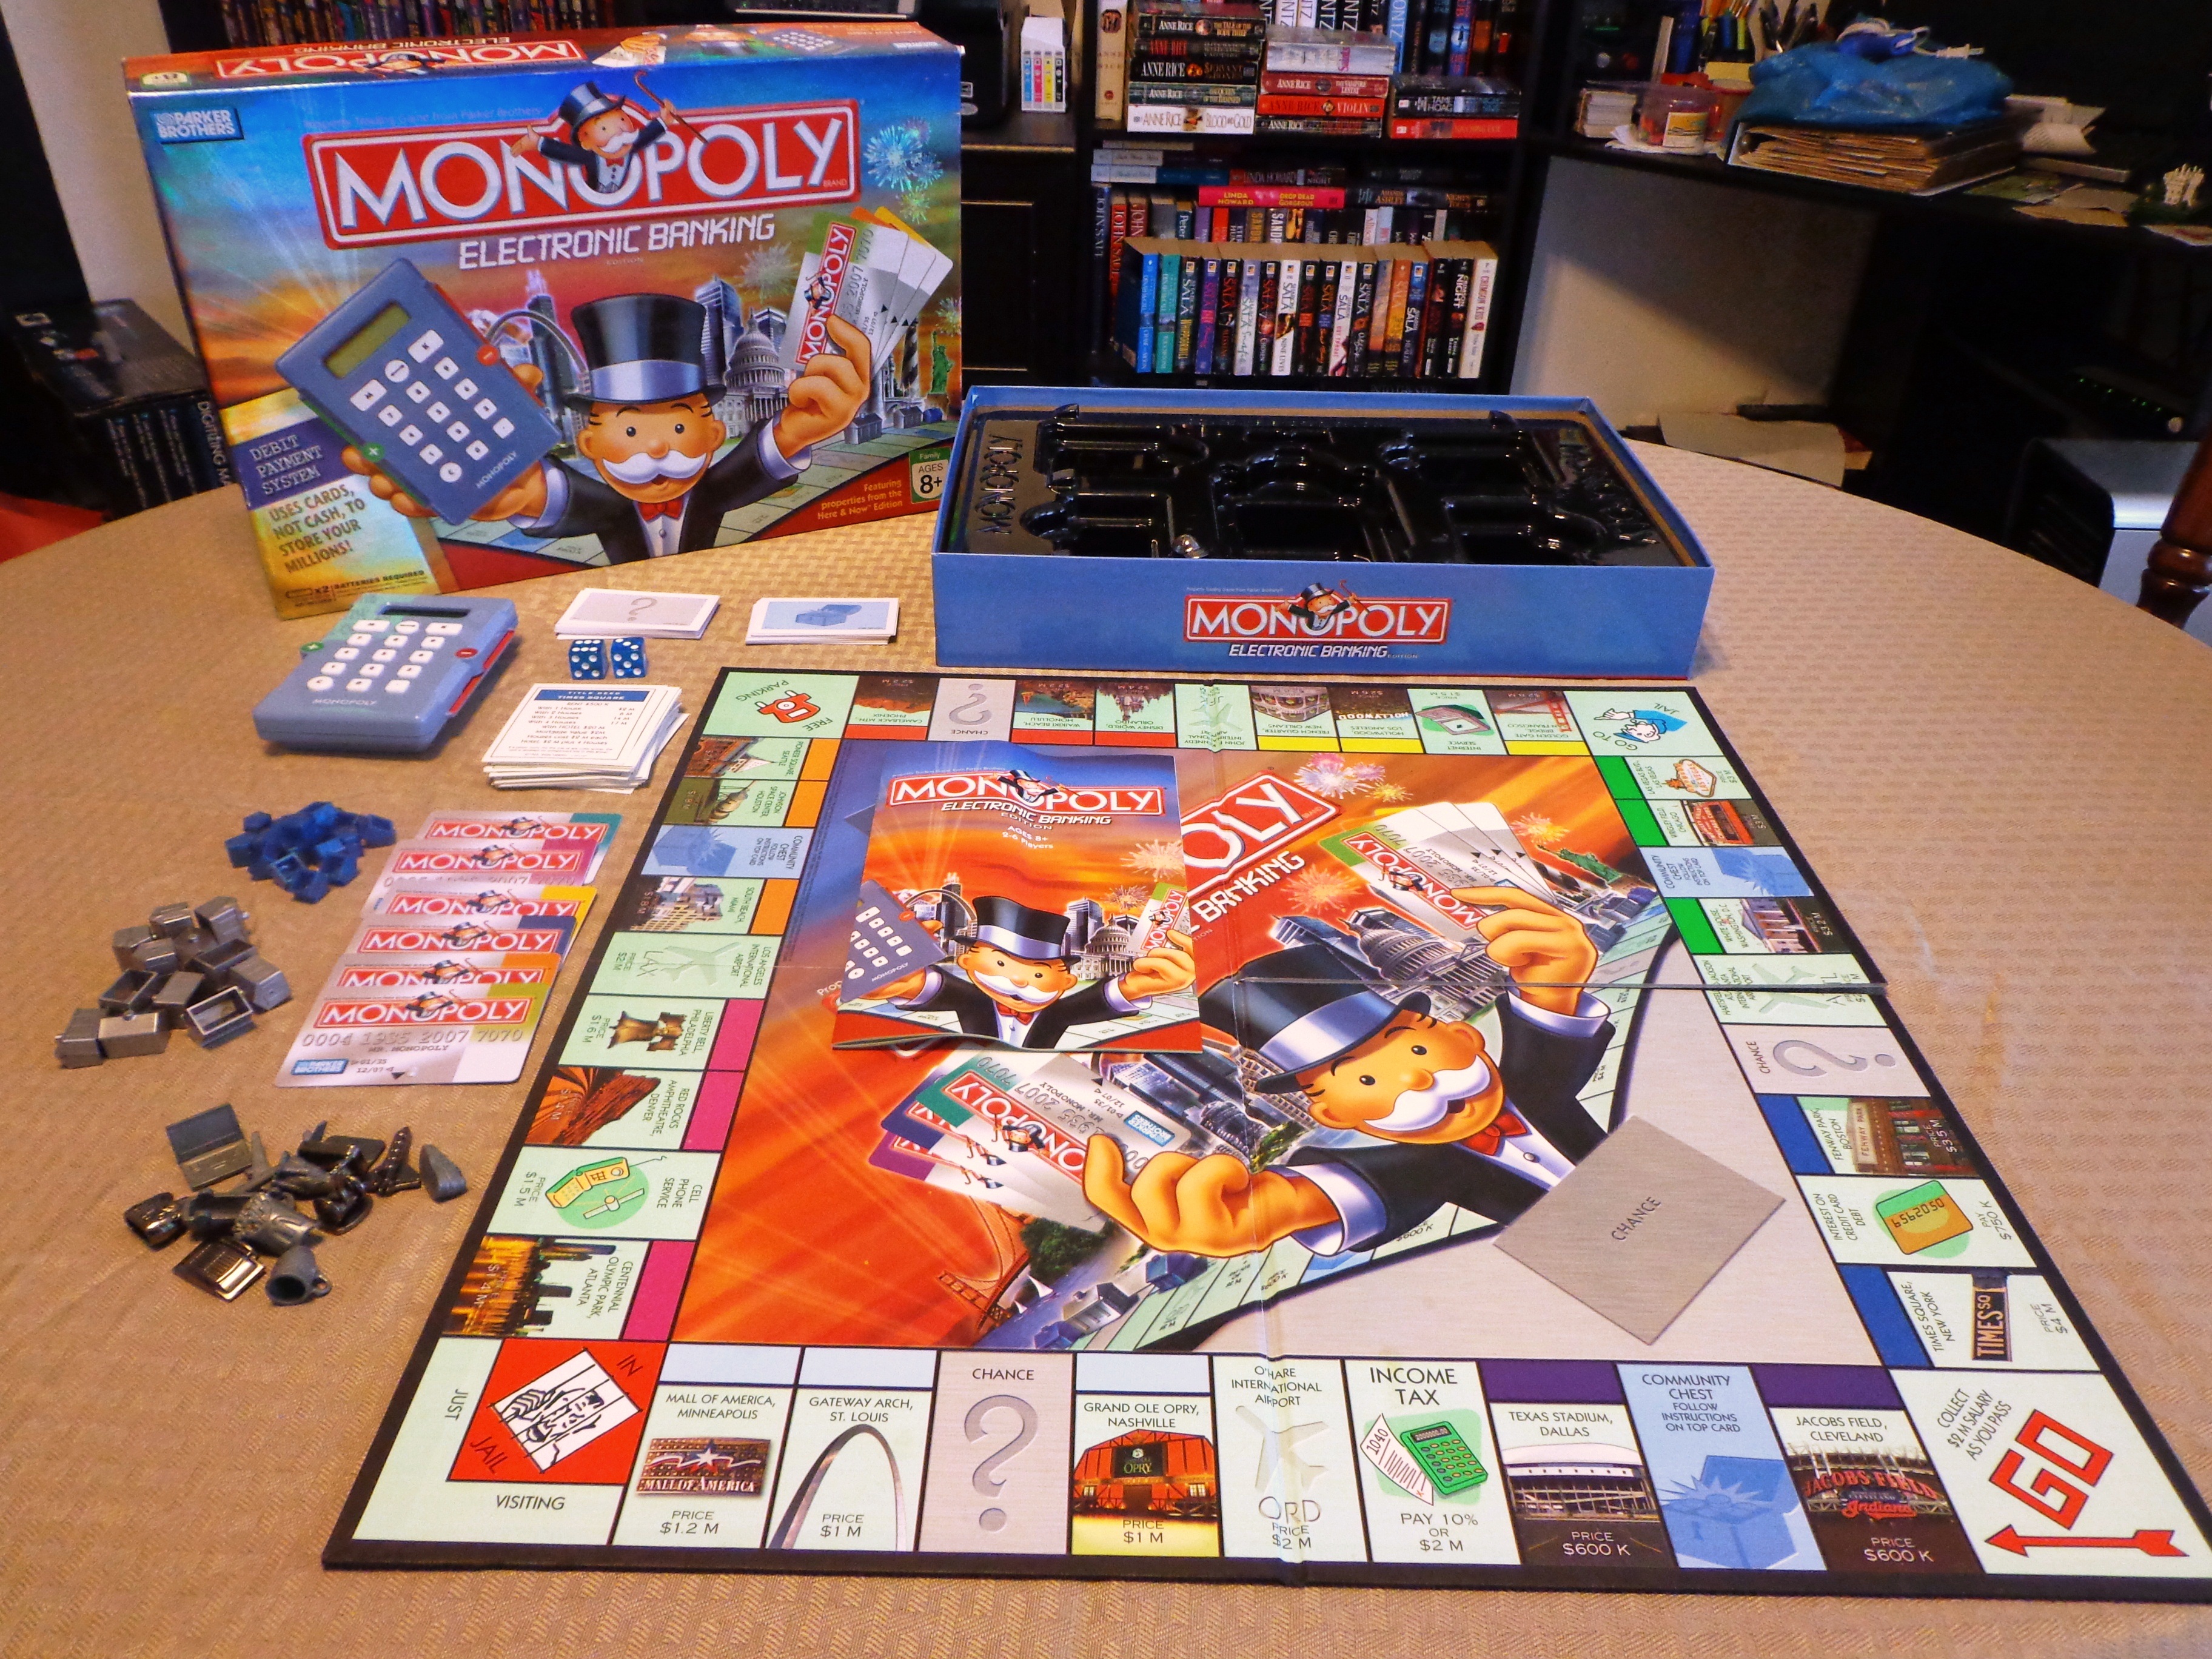 Monopoly Bank